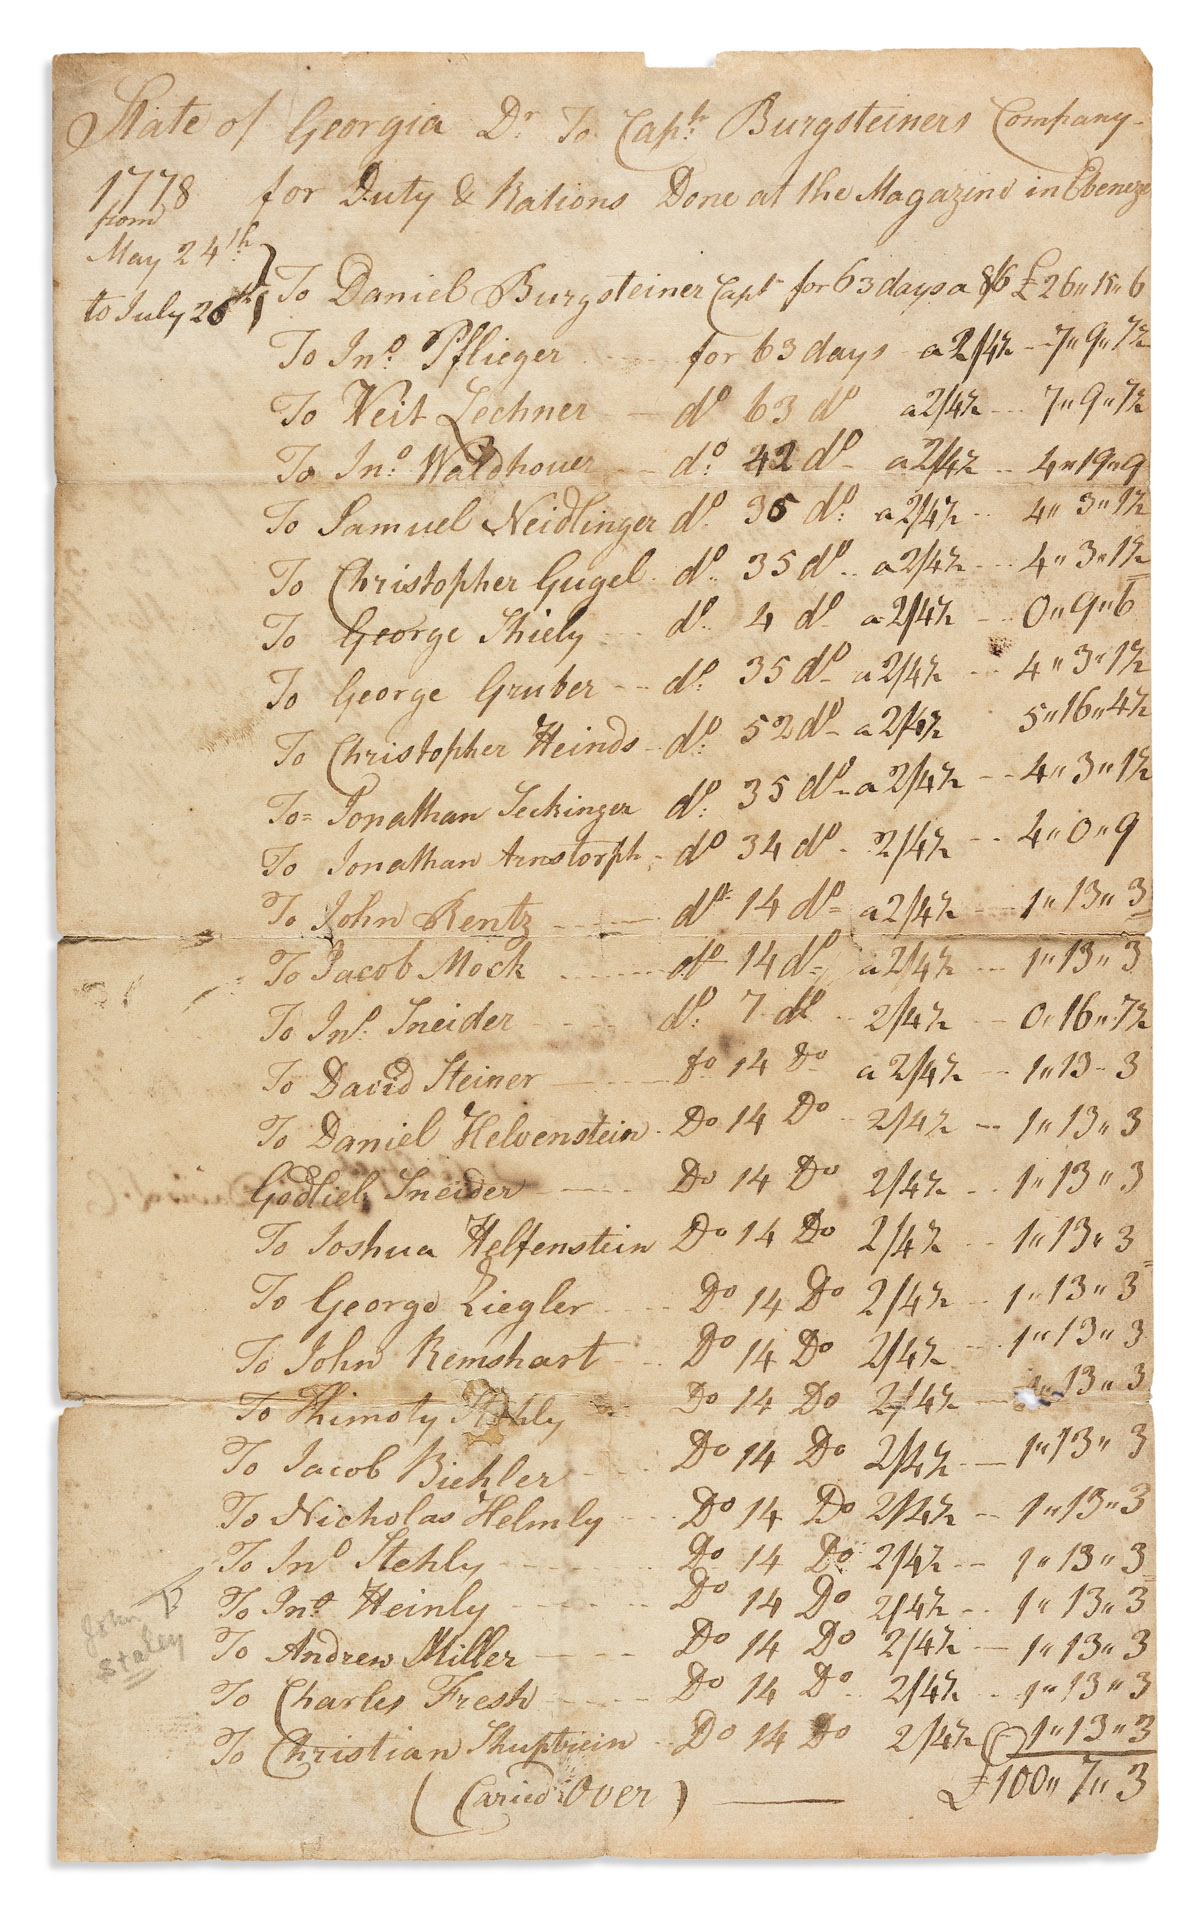 (AMERICAN REVOLUTION--1778.) Pay list for Captain Daniel Burgsteiners company.